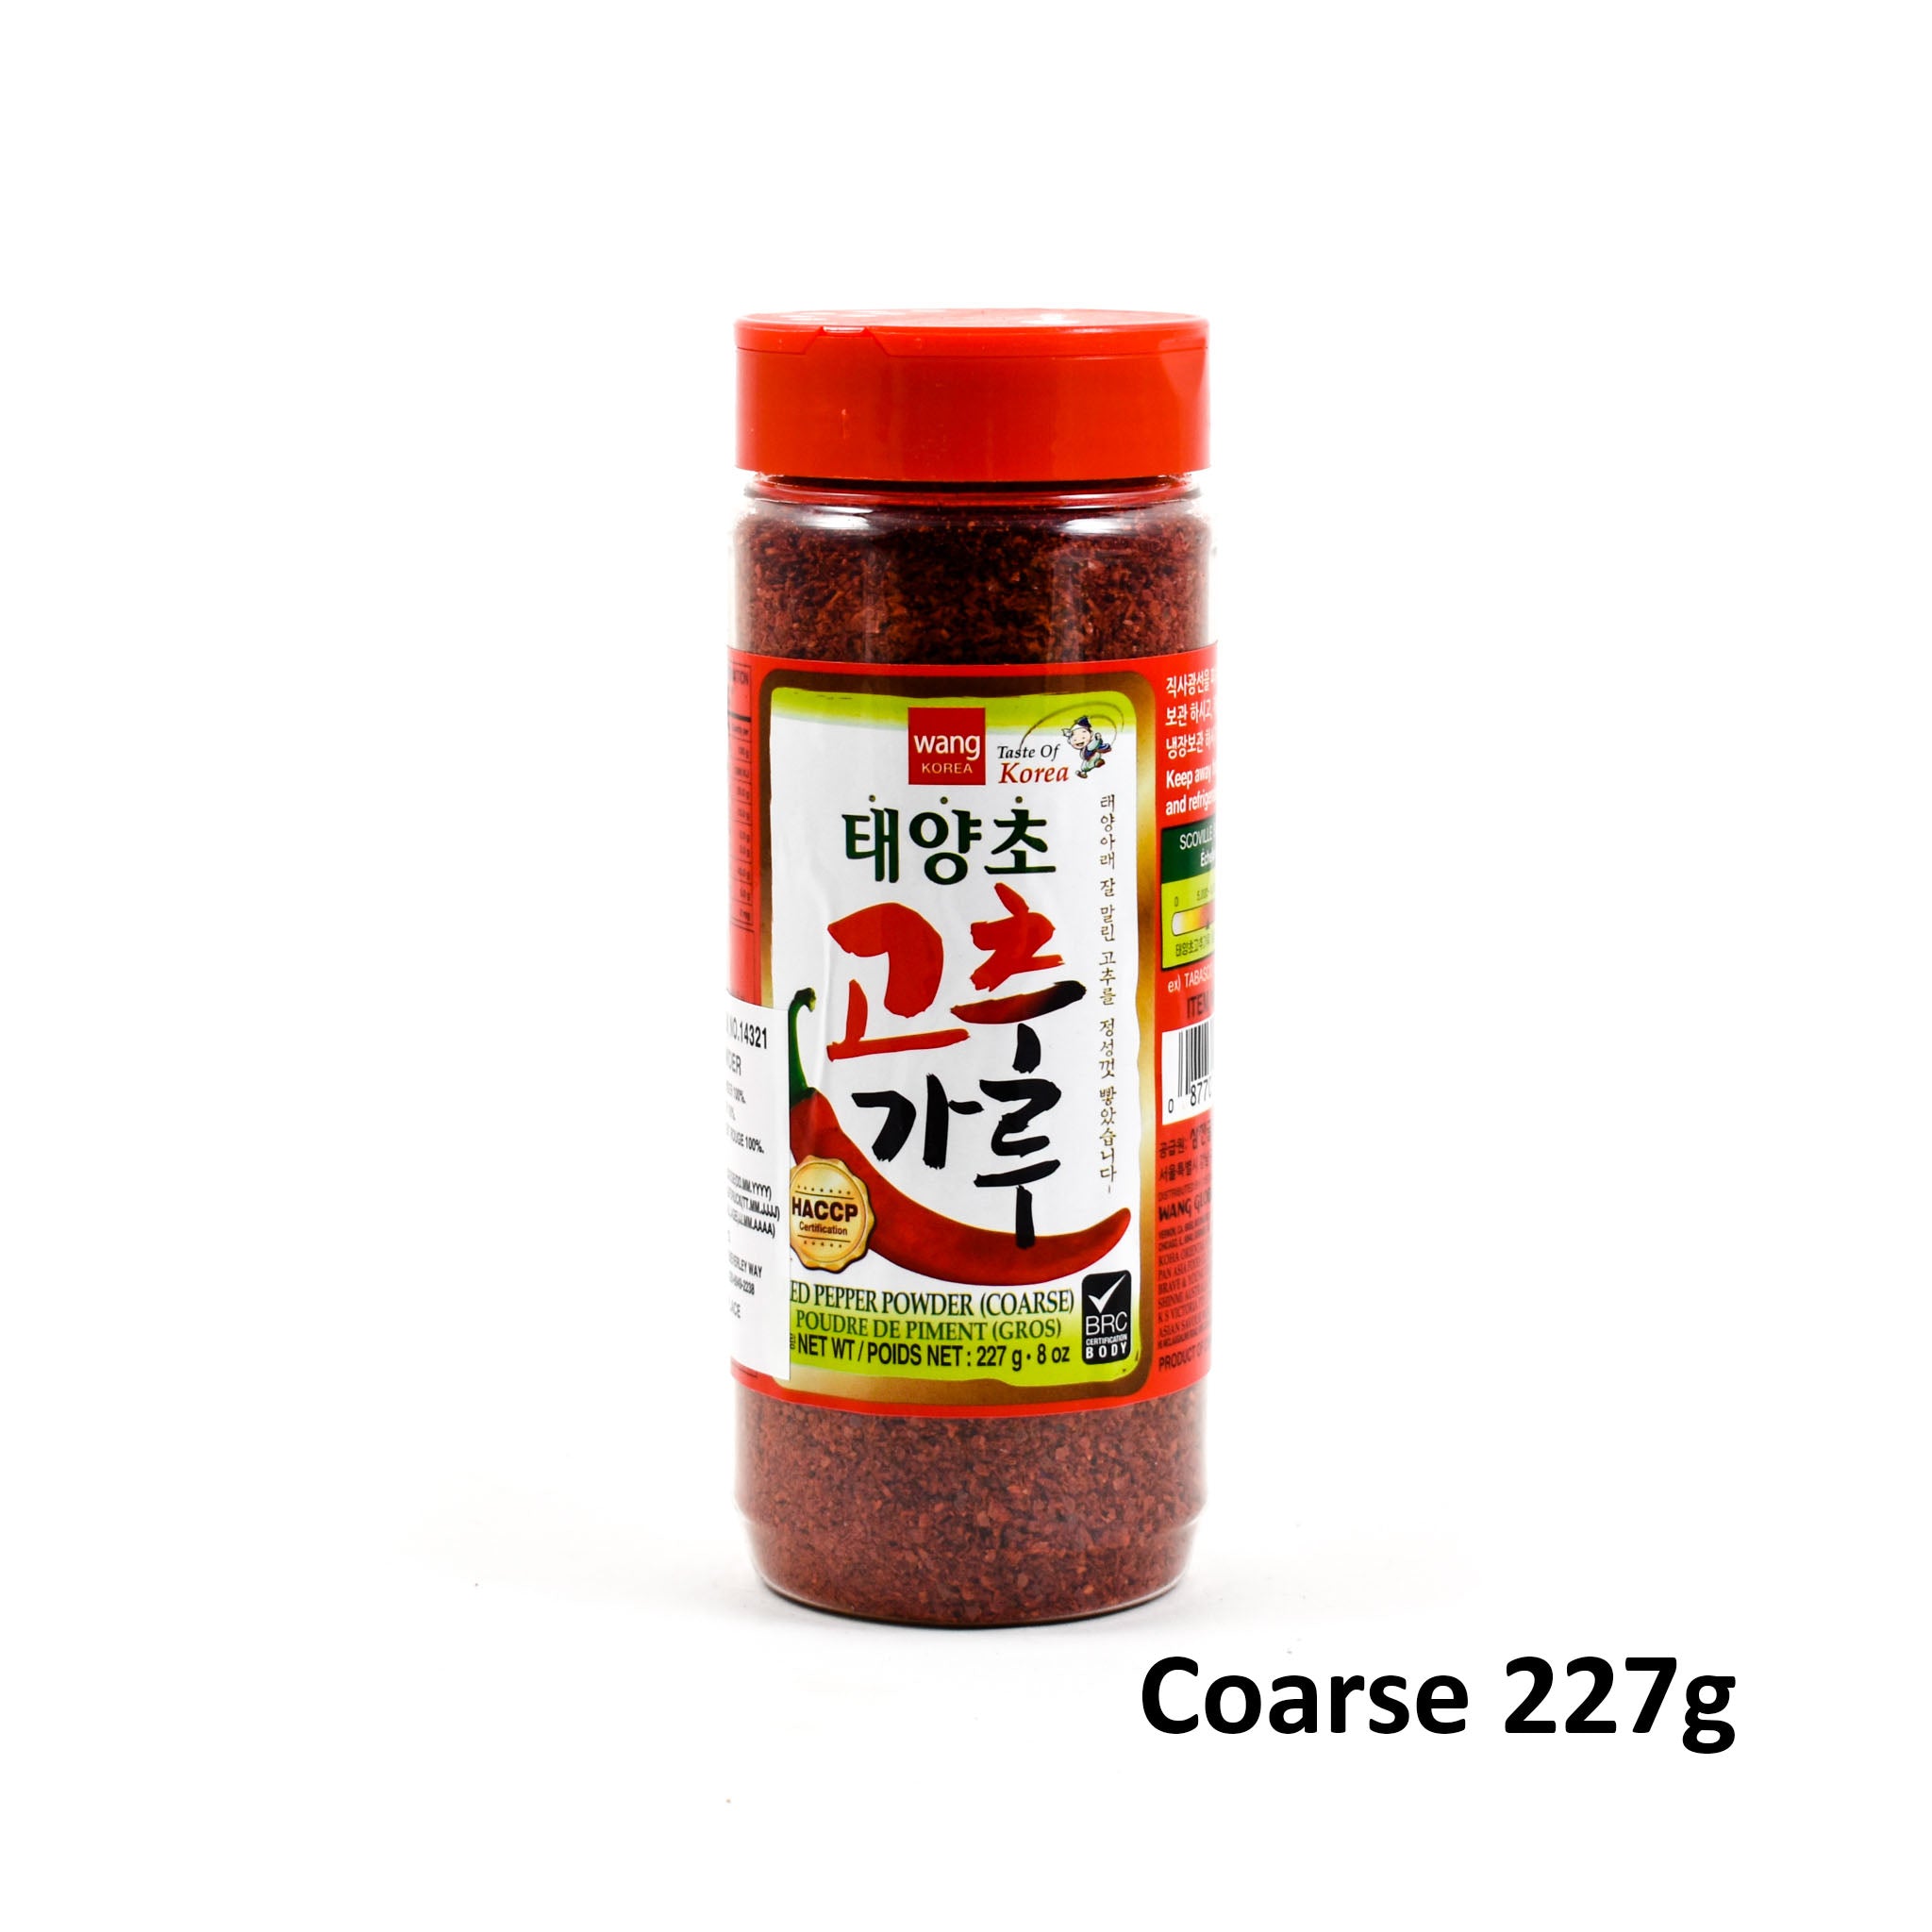 RED CHILI FLAKES POWDER GOCHUGARU 453G - Asian Grocer